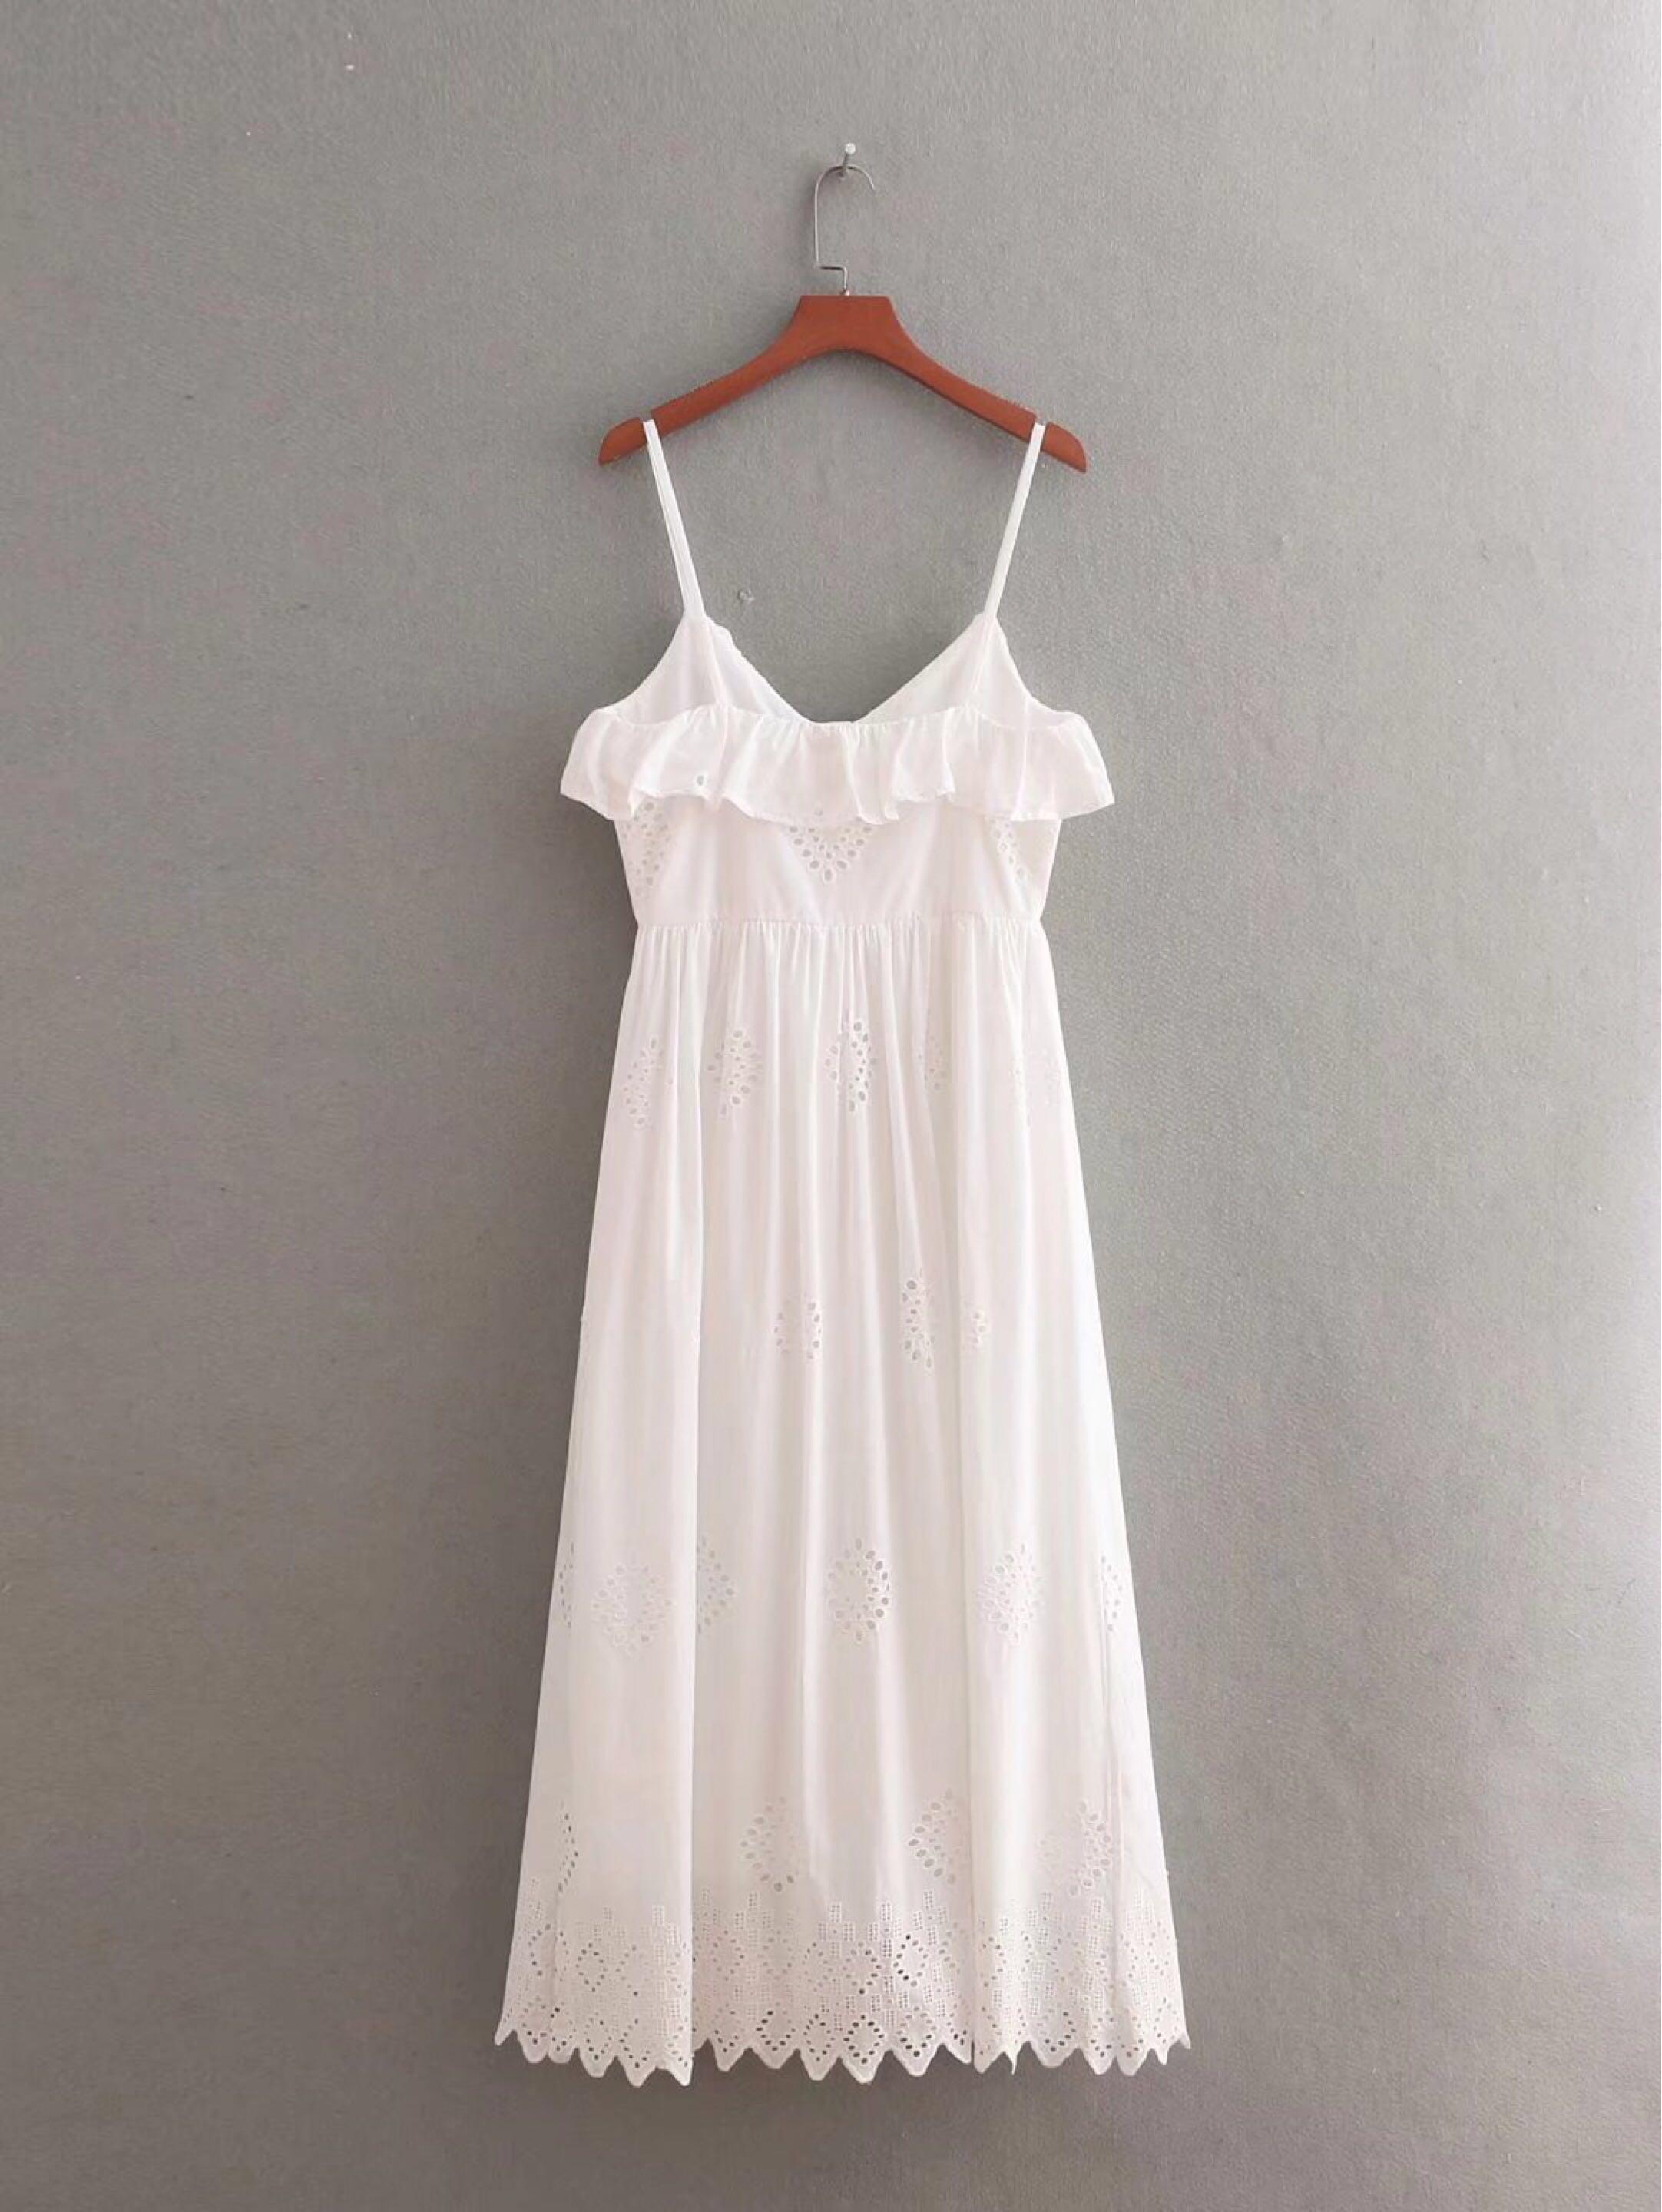 zara white dress maxi